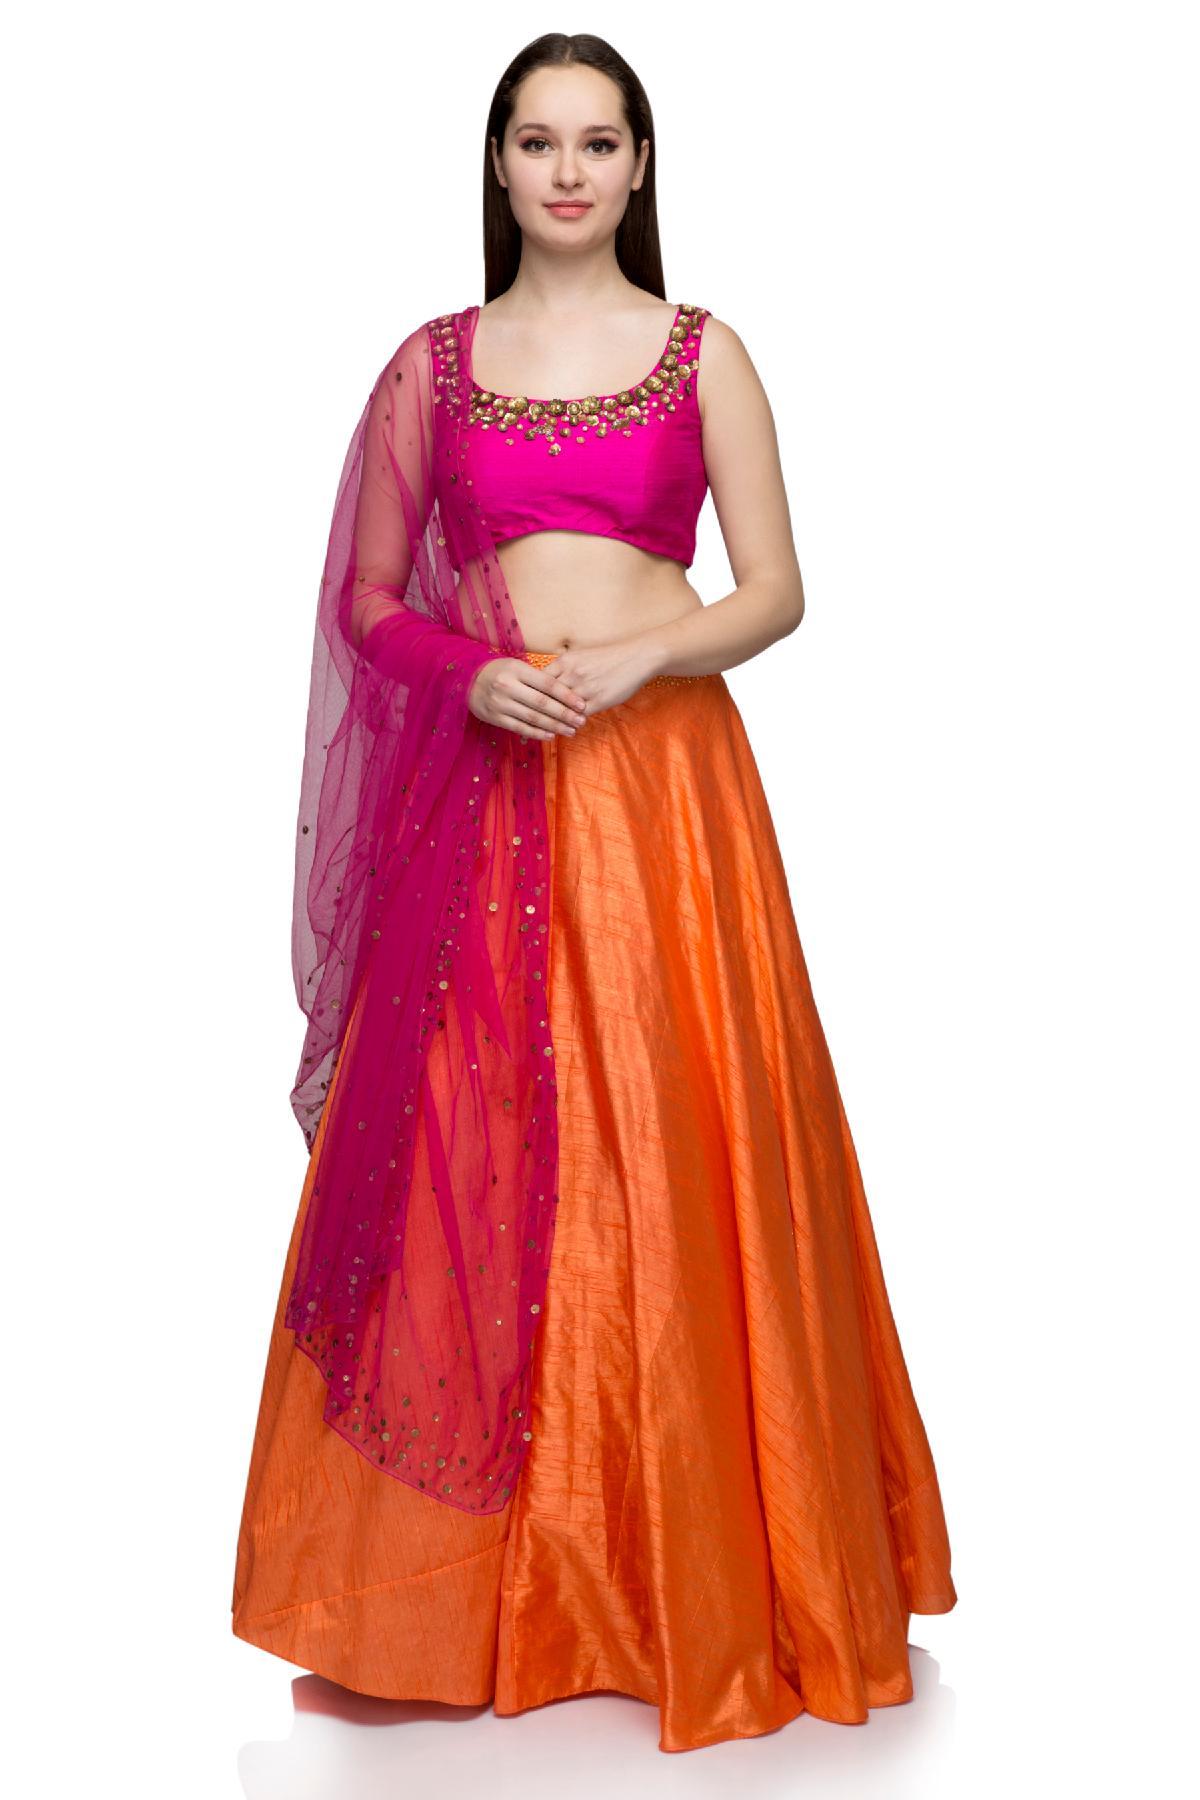 Orange,Pink Colour Wedding Lehenga Choli in Fancy Fabric.